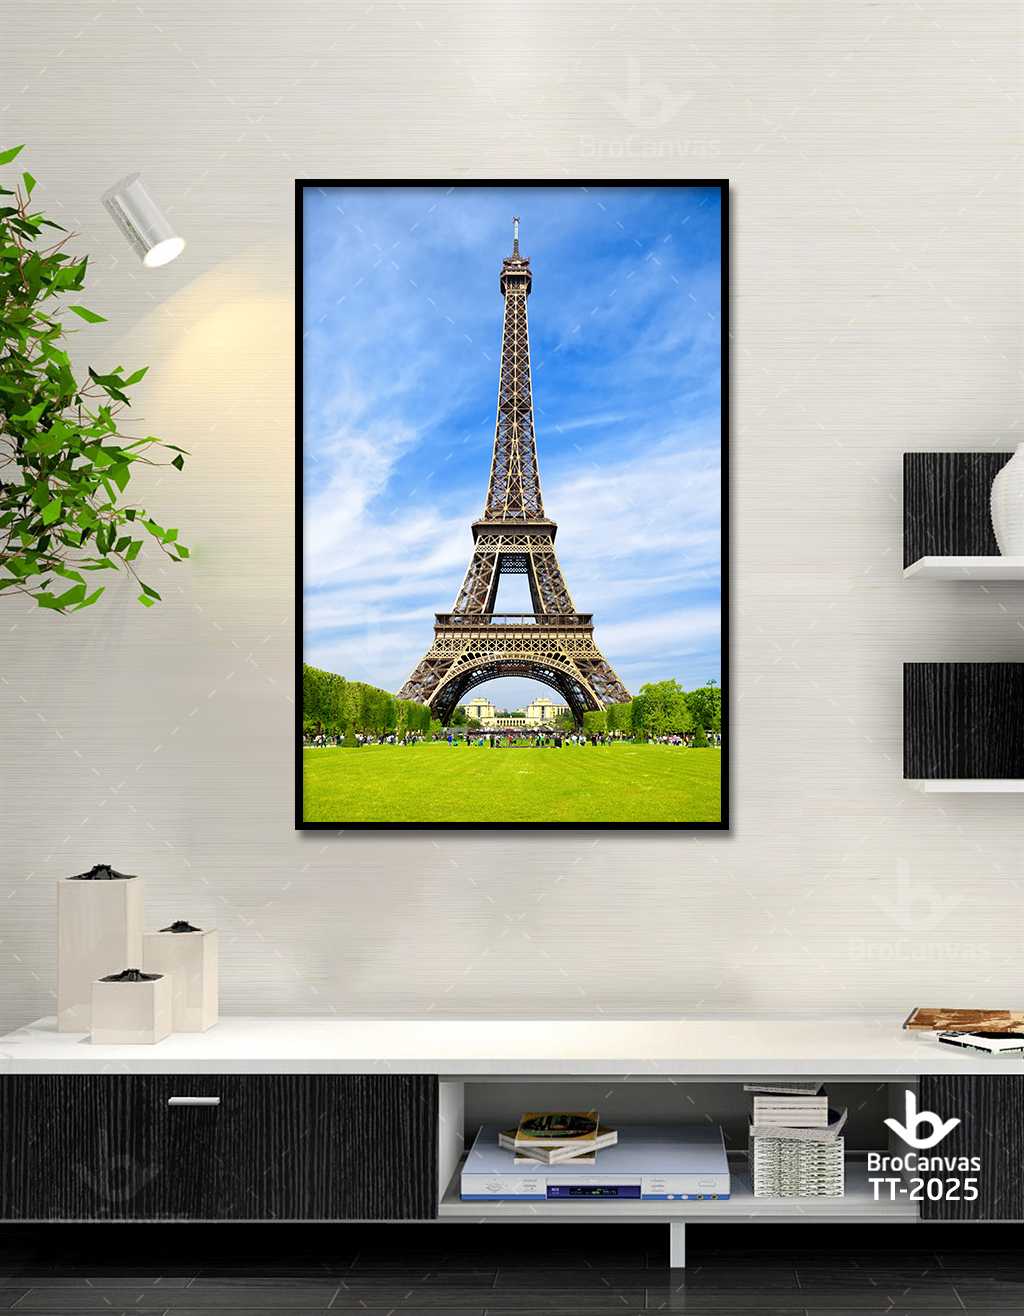 Tranh Tháp Eiffel TT-2025